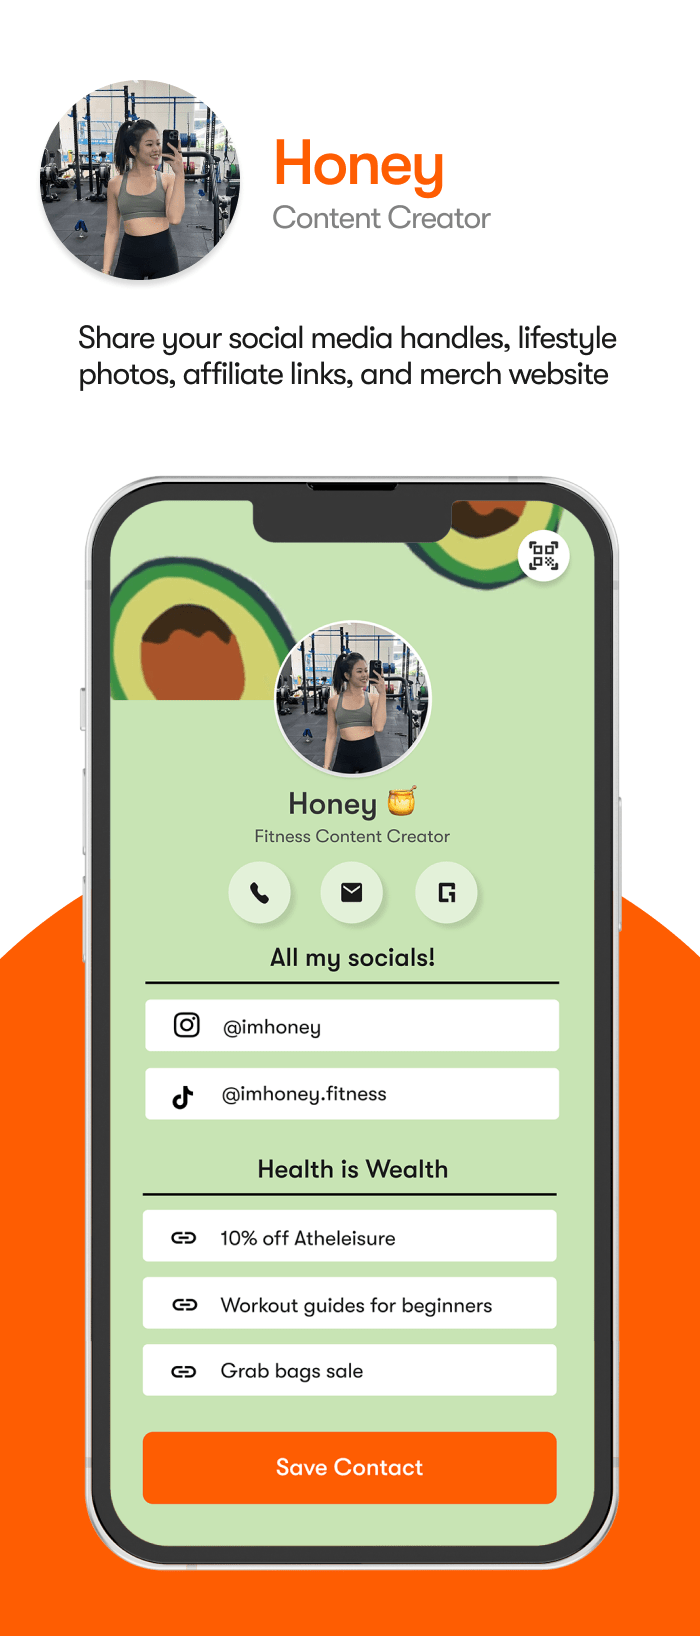 One Good Card user - Honey